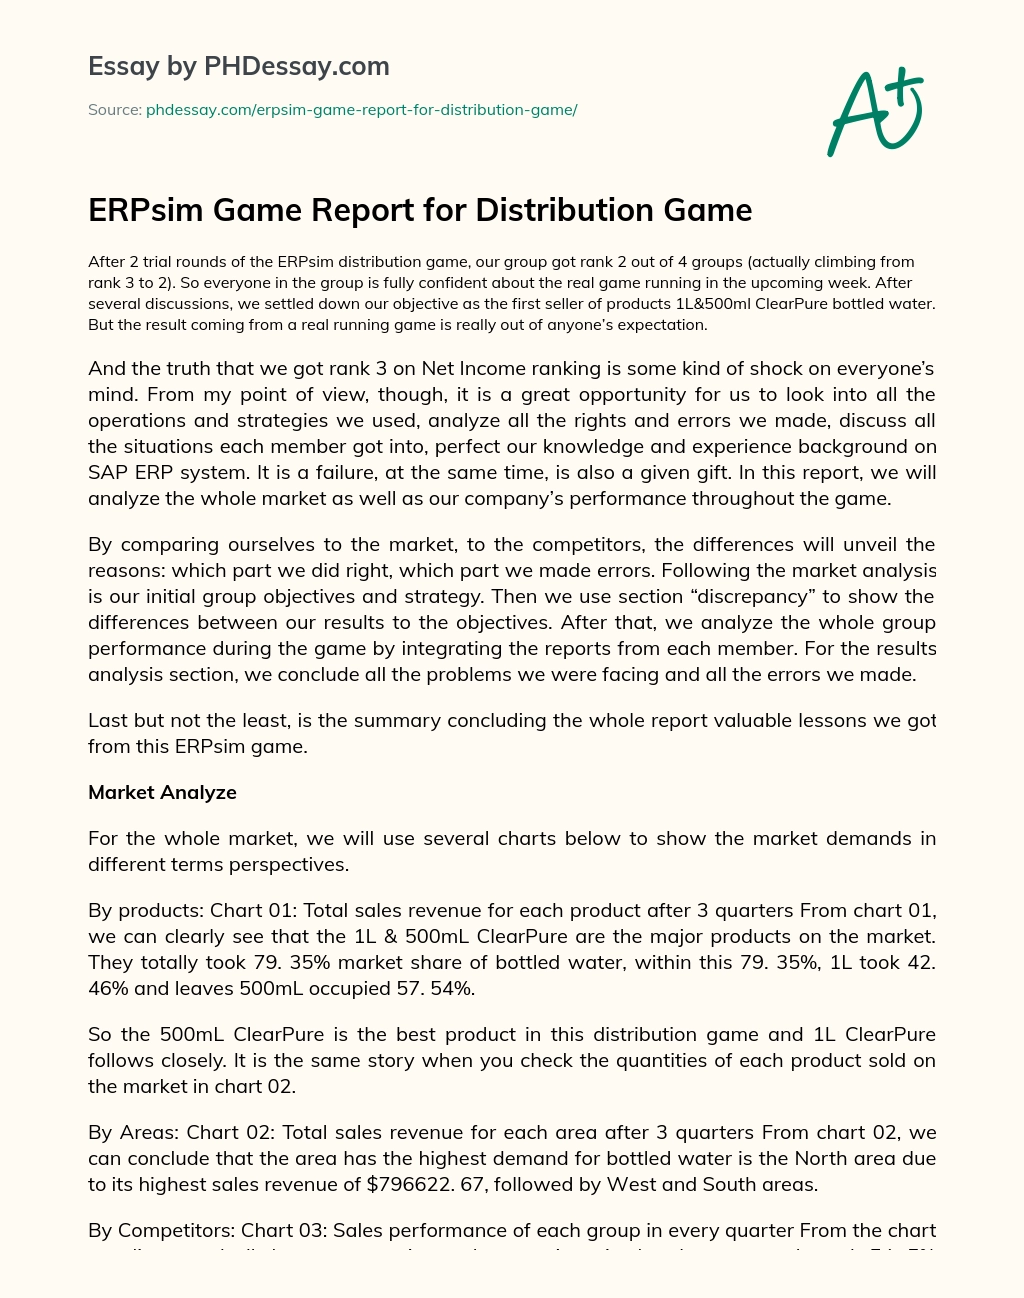 ERPsim Game Report for Distribution Game essay